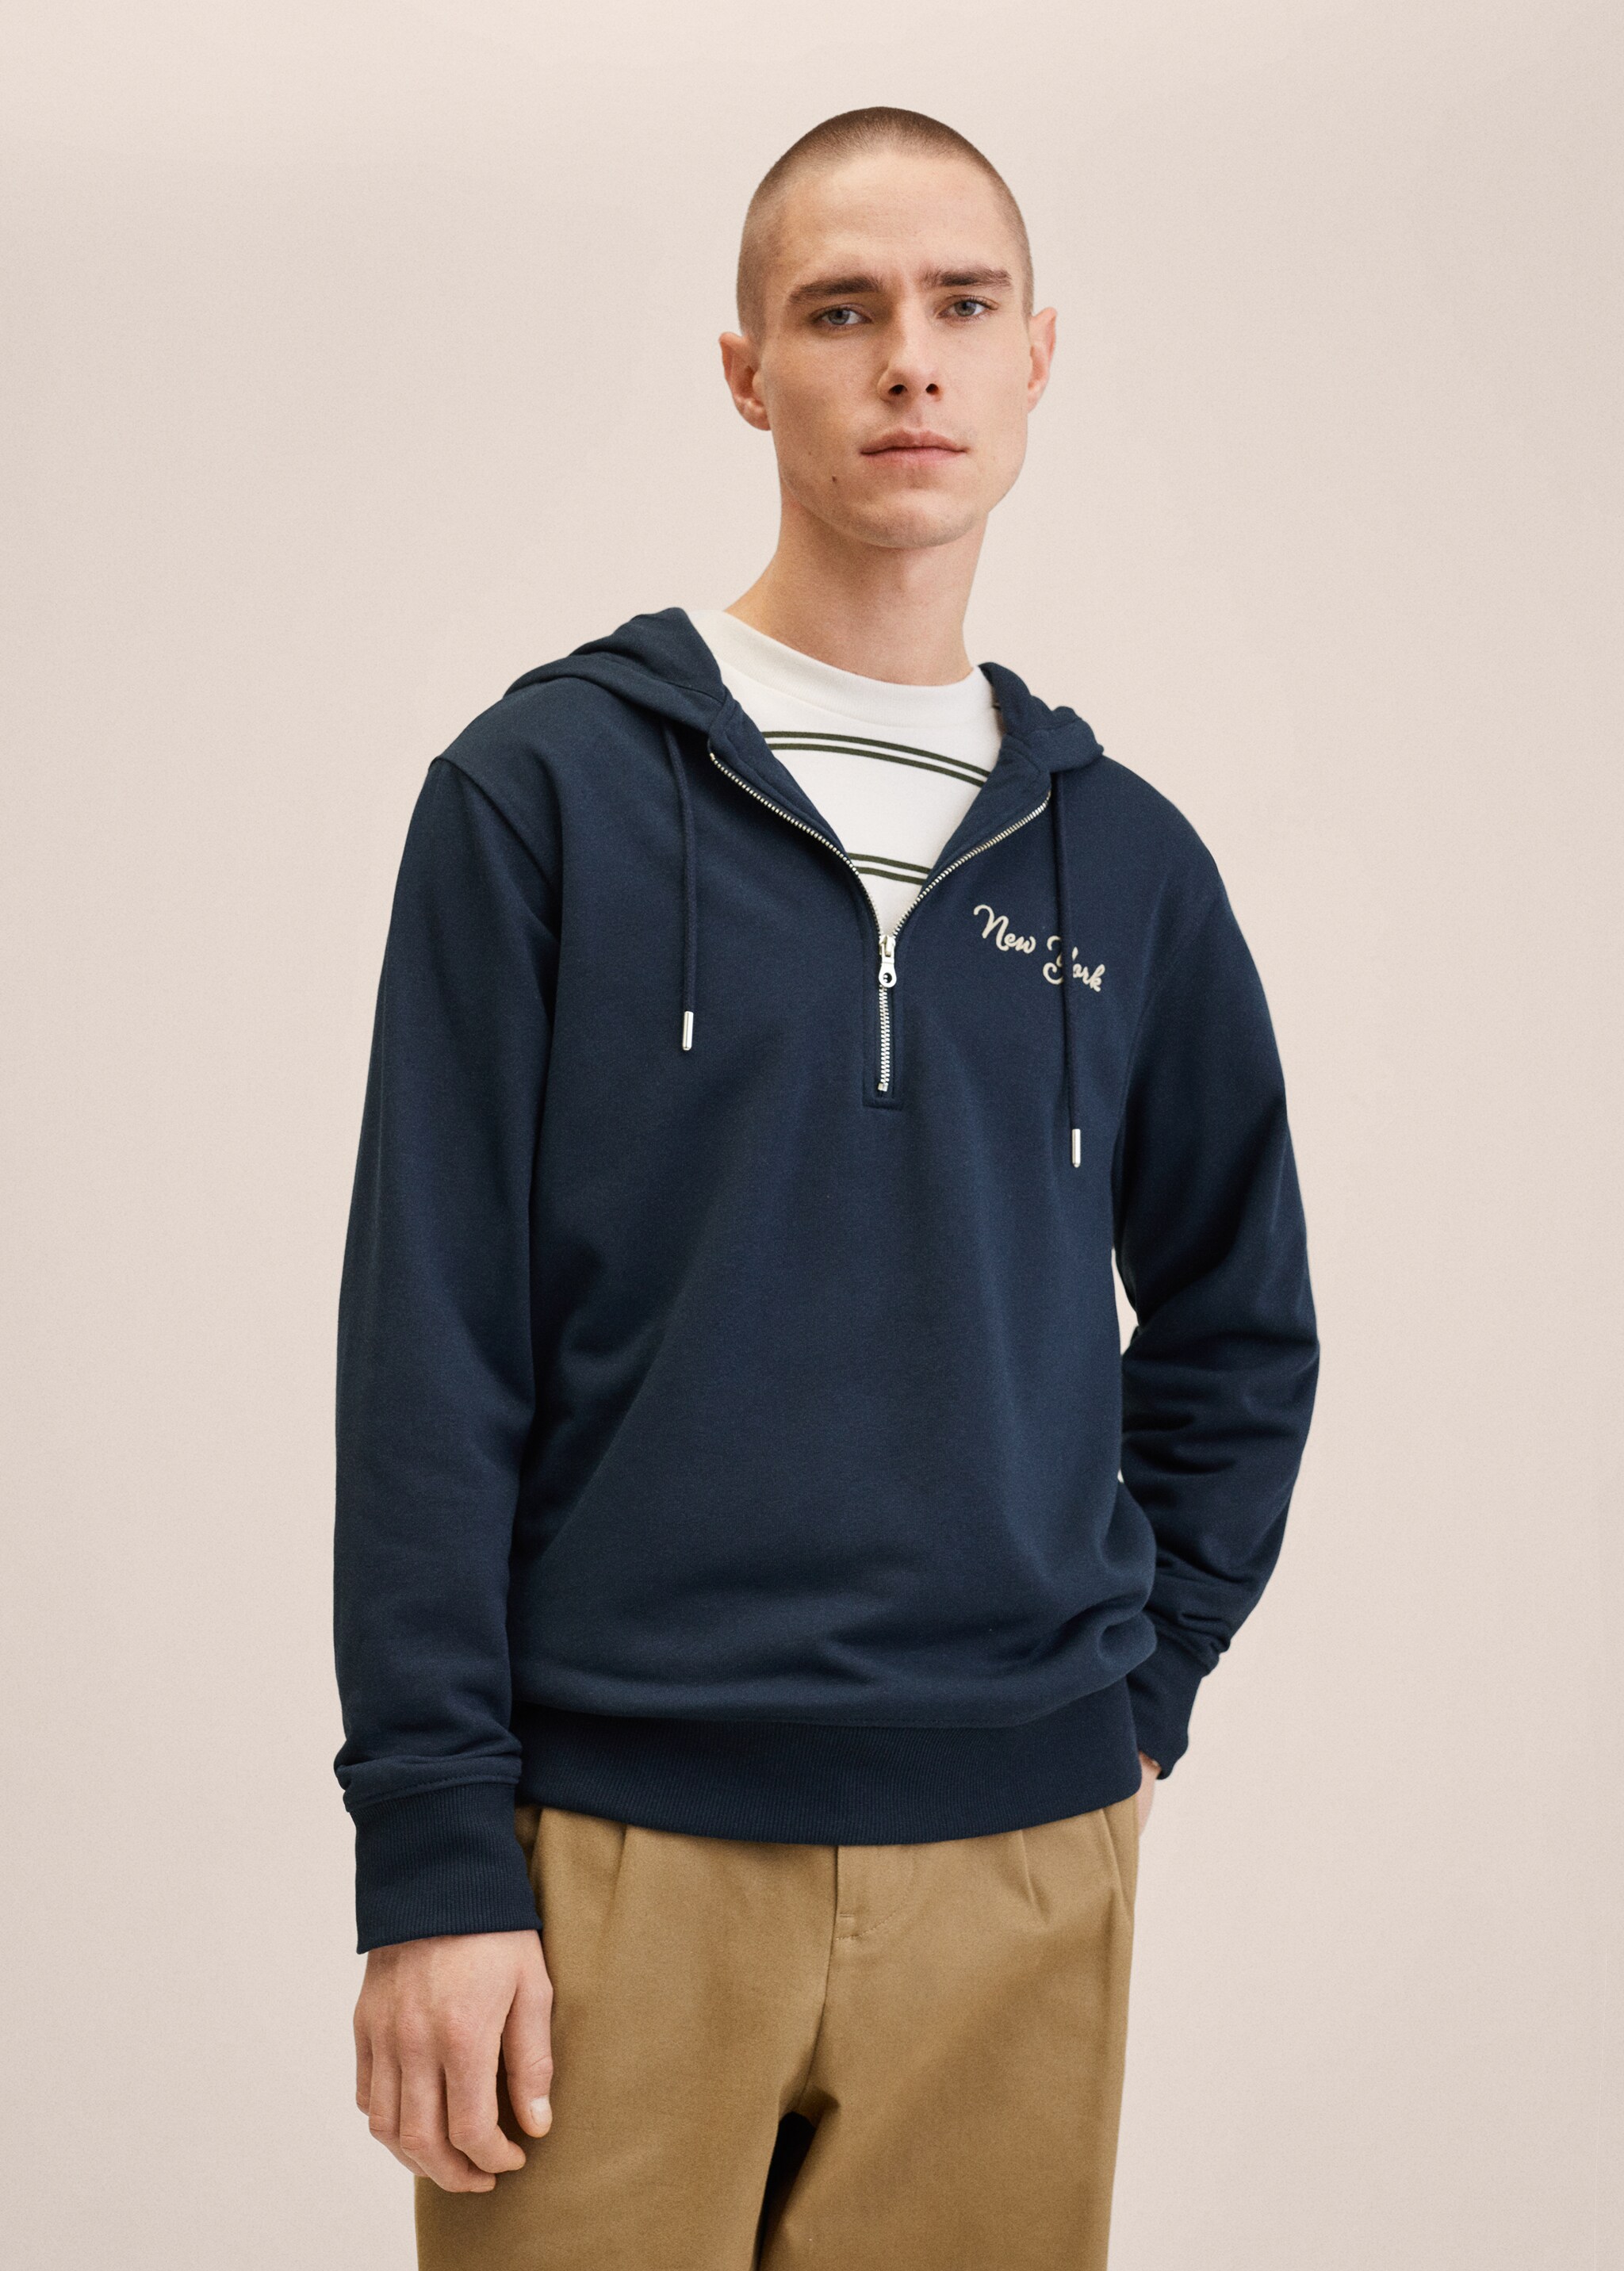 Zip embroidered sweatshirt - Medium plane